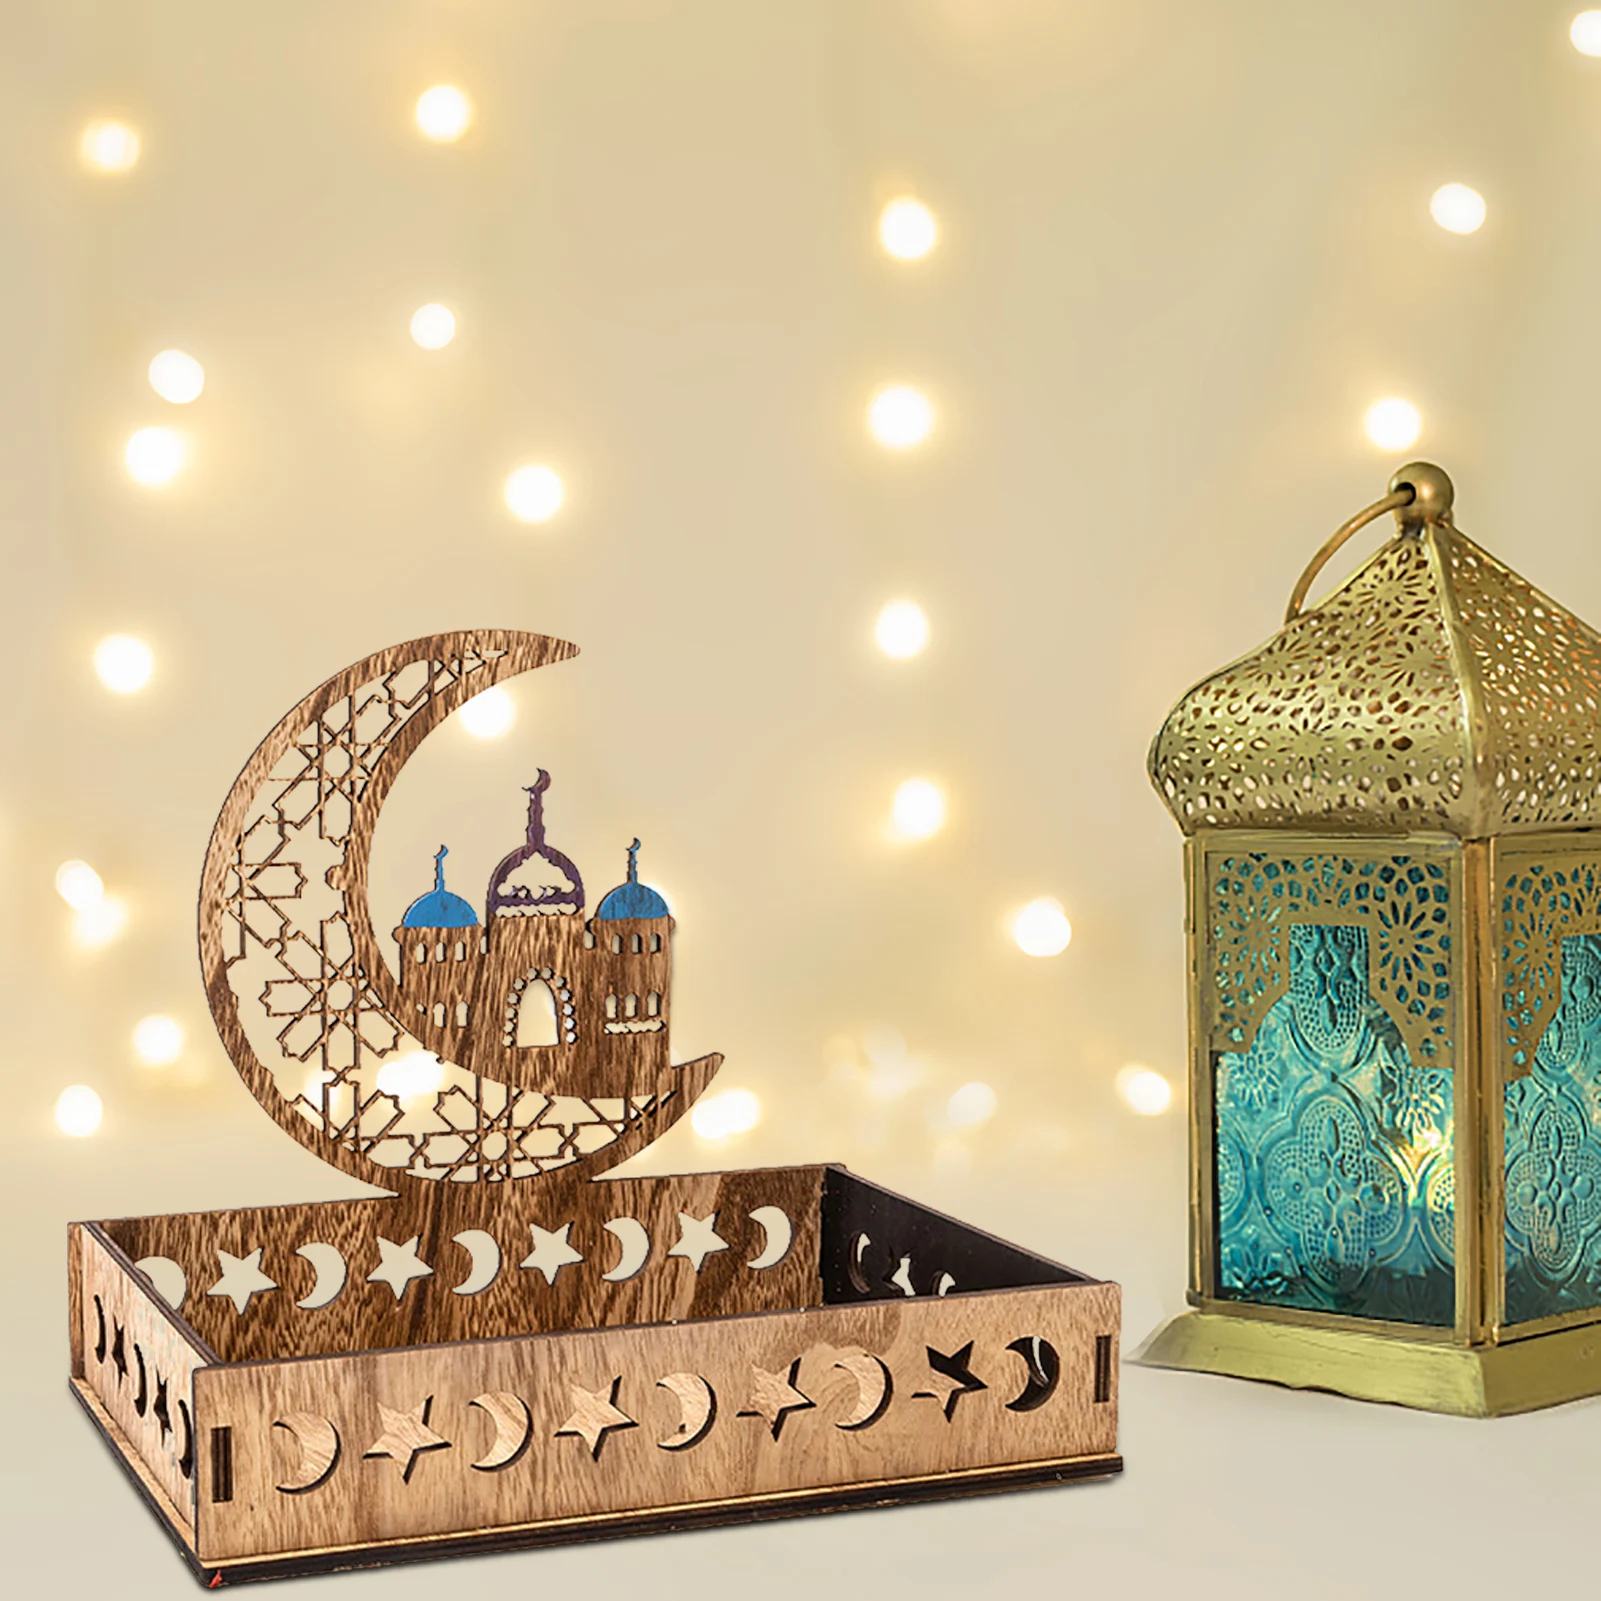 Wooden Eid Mubarak Decoration Ramadan Food Dessert Tray Moon Star Serving Plates Islam Muslim Supplies EID AI Adha Party Decor